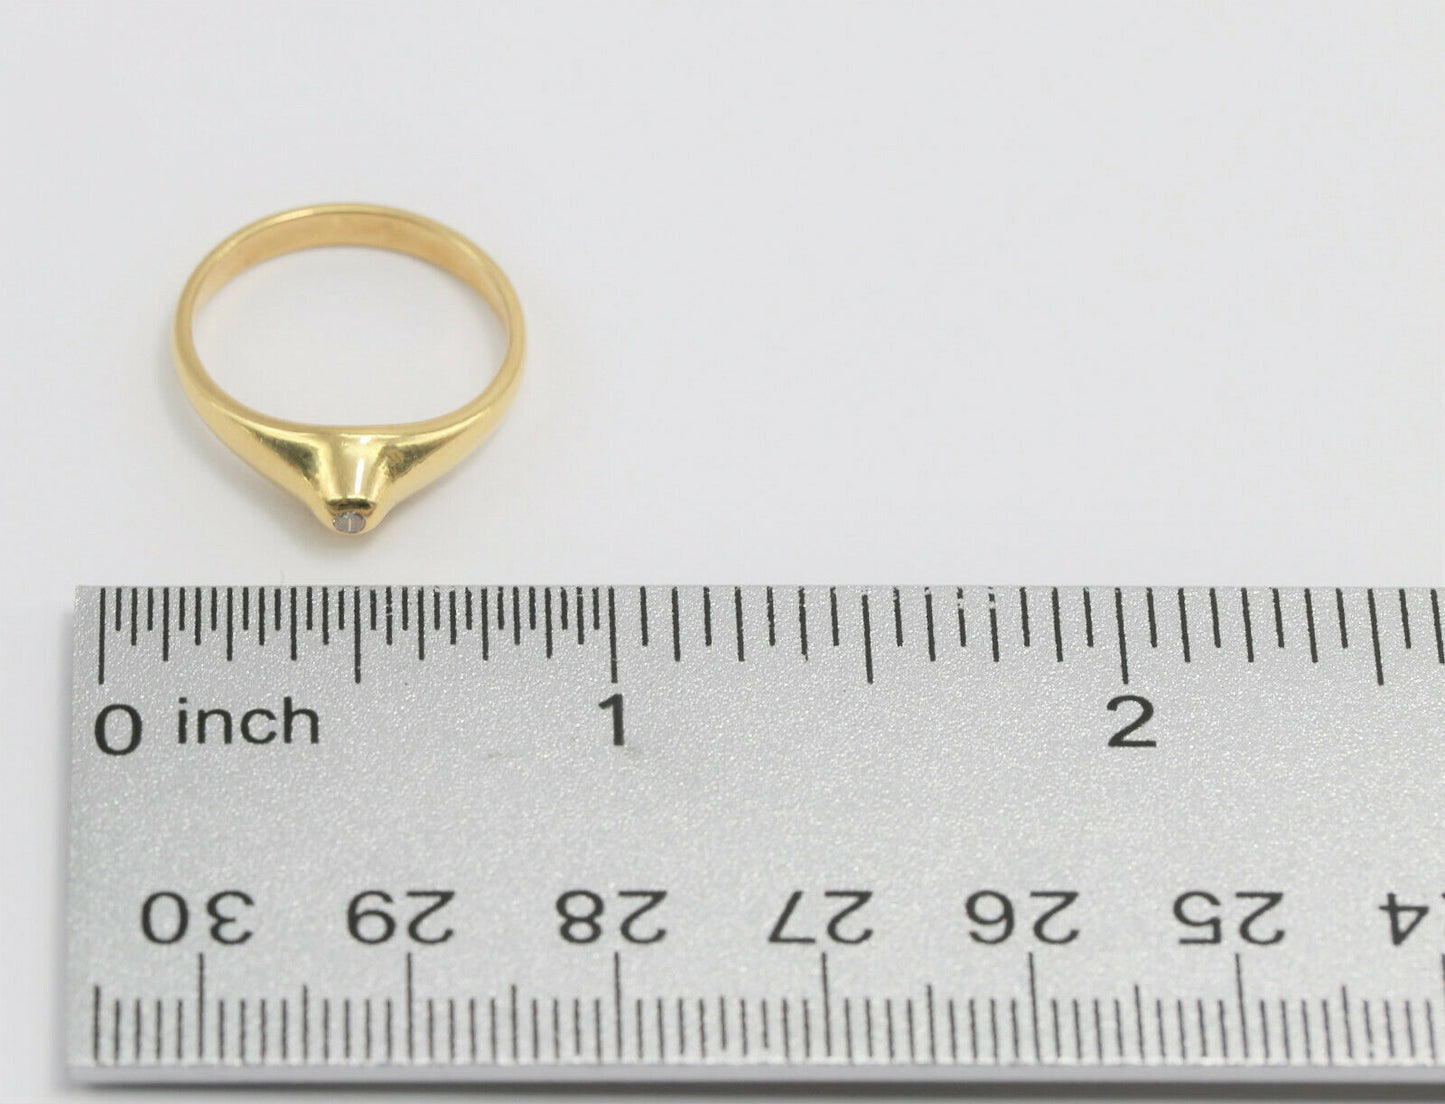 18k Yellow Gold Tiffany & Co. Elsa Peretti Diamond Pointed Top Ring, Size 5.25 - 3.3g